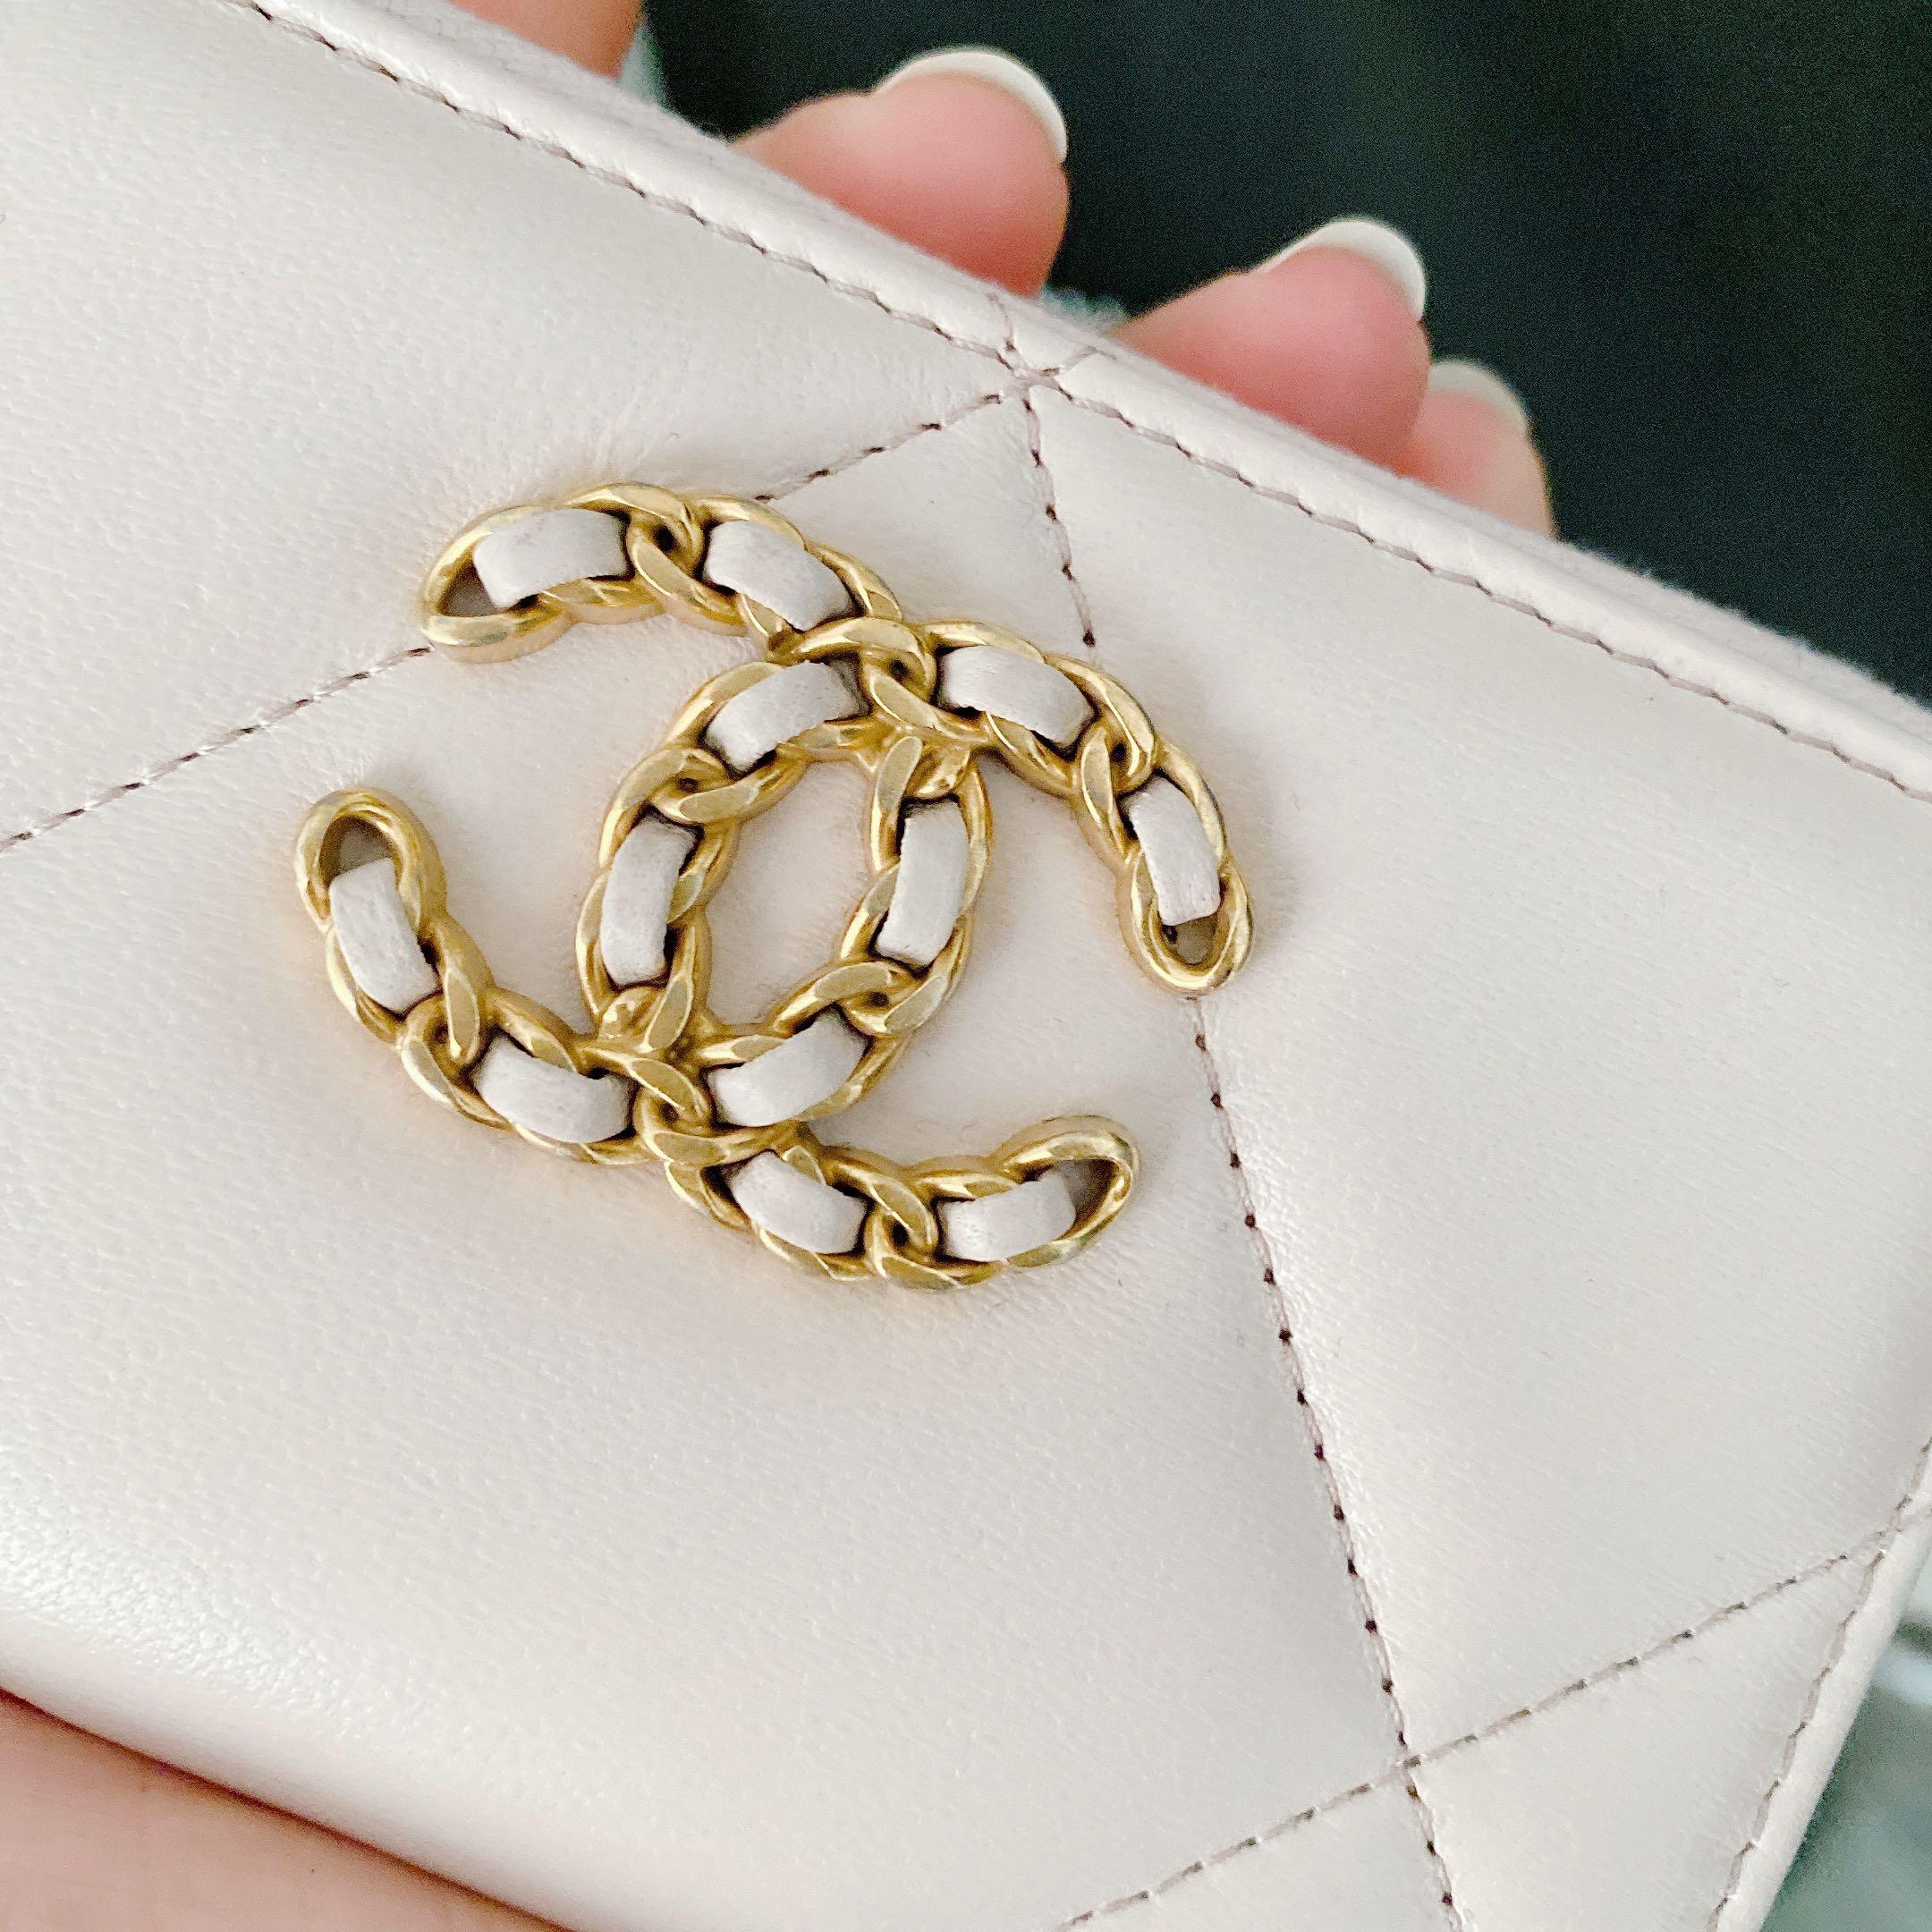 Chanel 19 zipped coin purse, Women's Fashion, Bags & Wallets